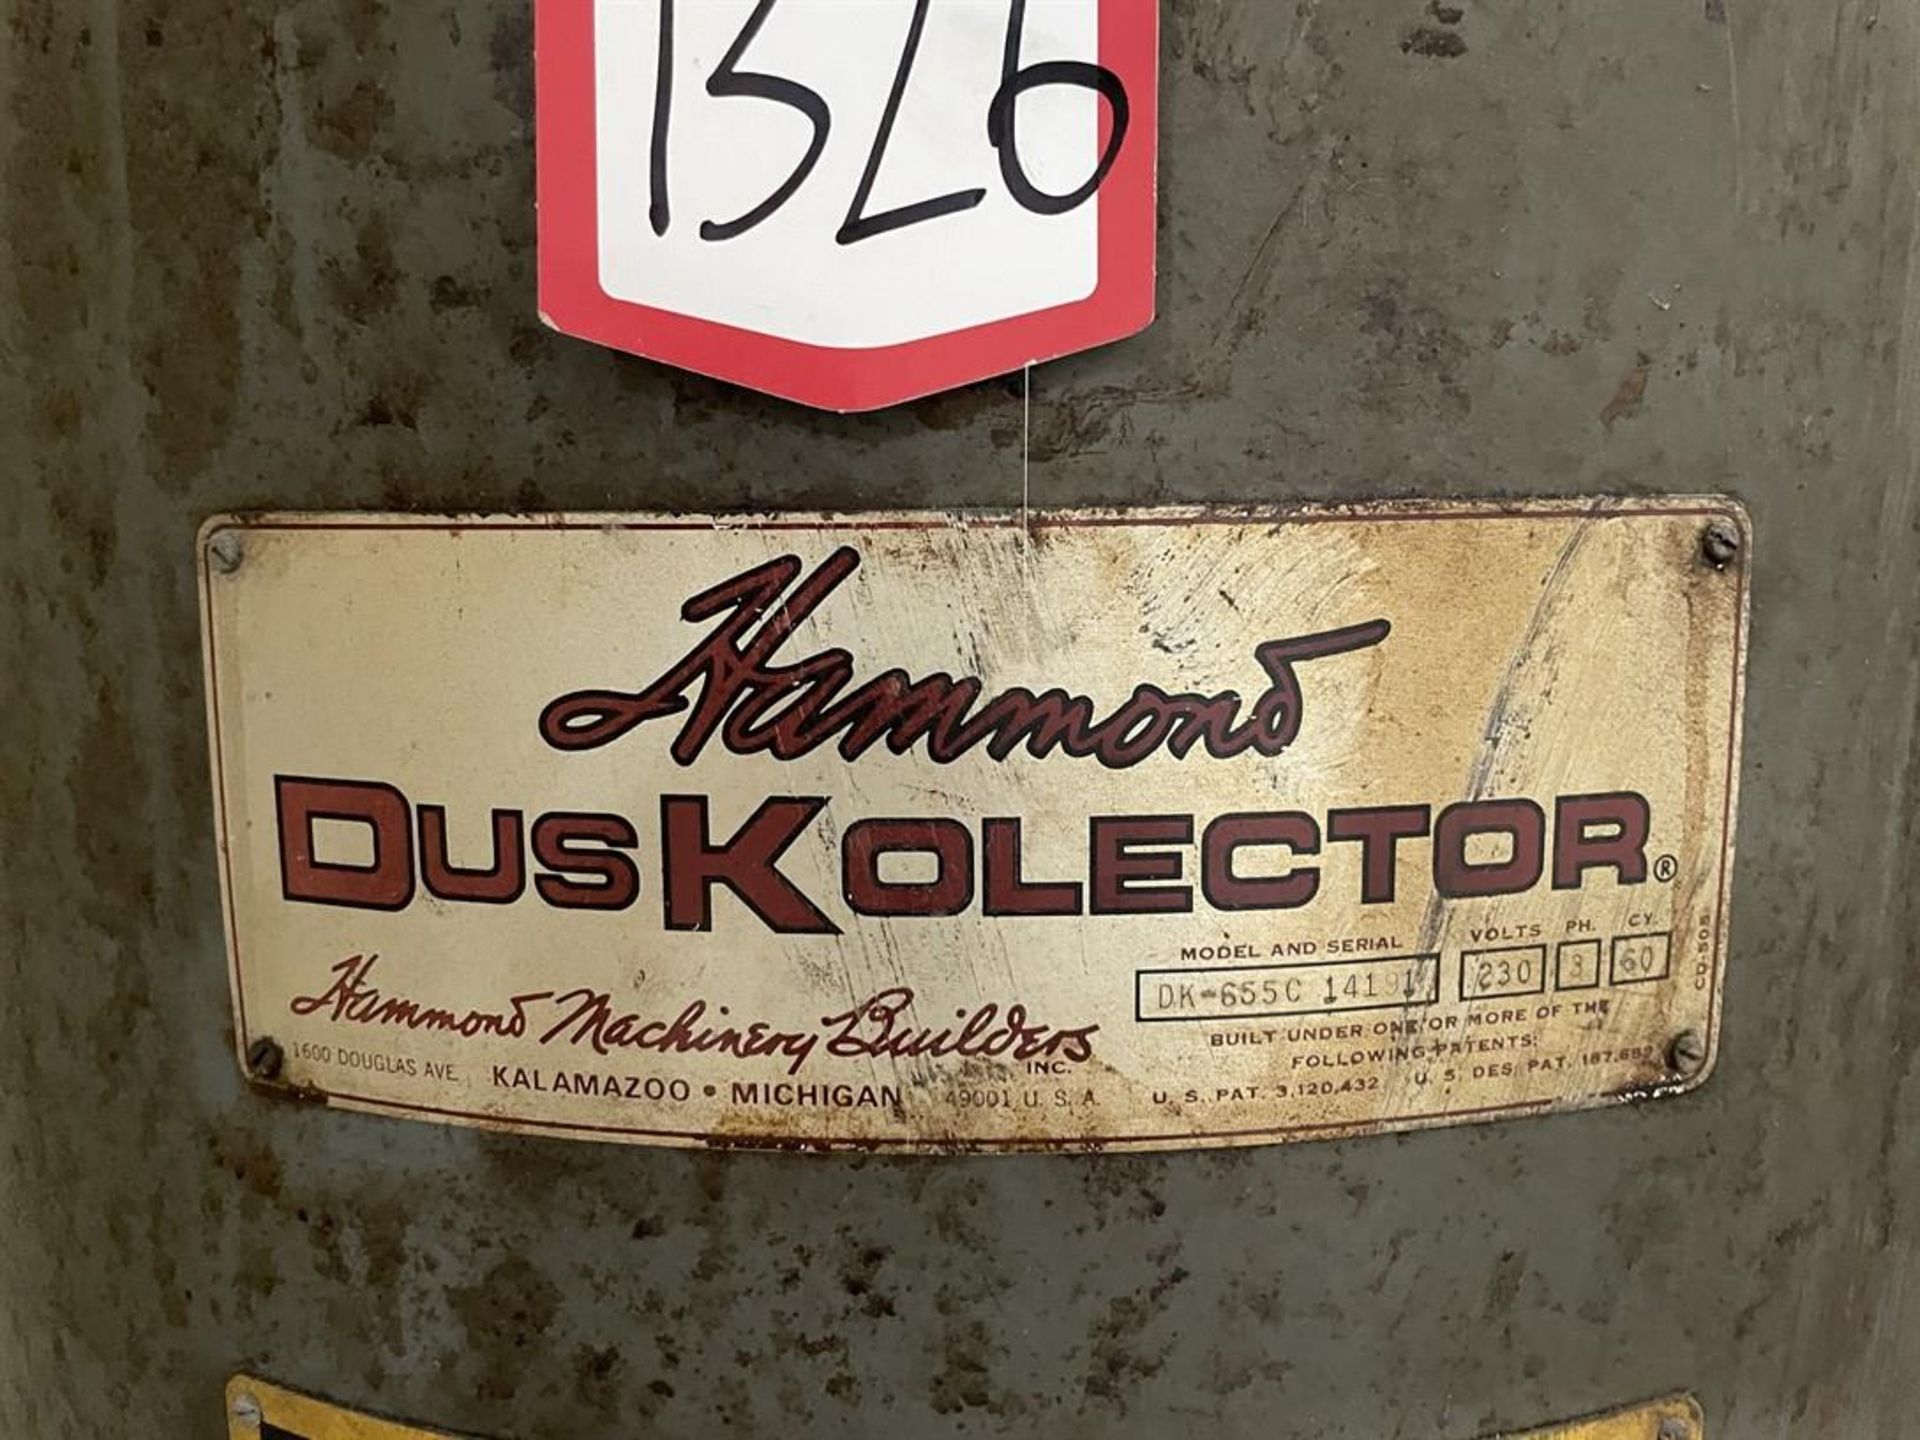 HAMMOND DusKolector DK-655C 14191 Dust Collector - Image 2 of 2